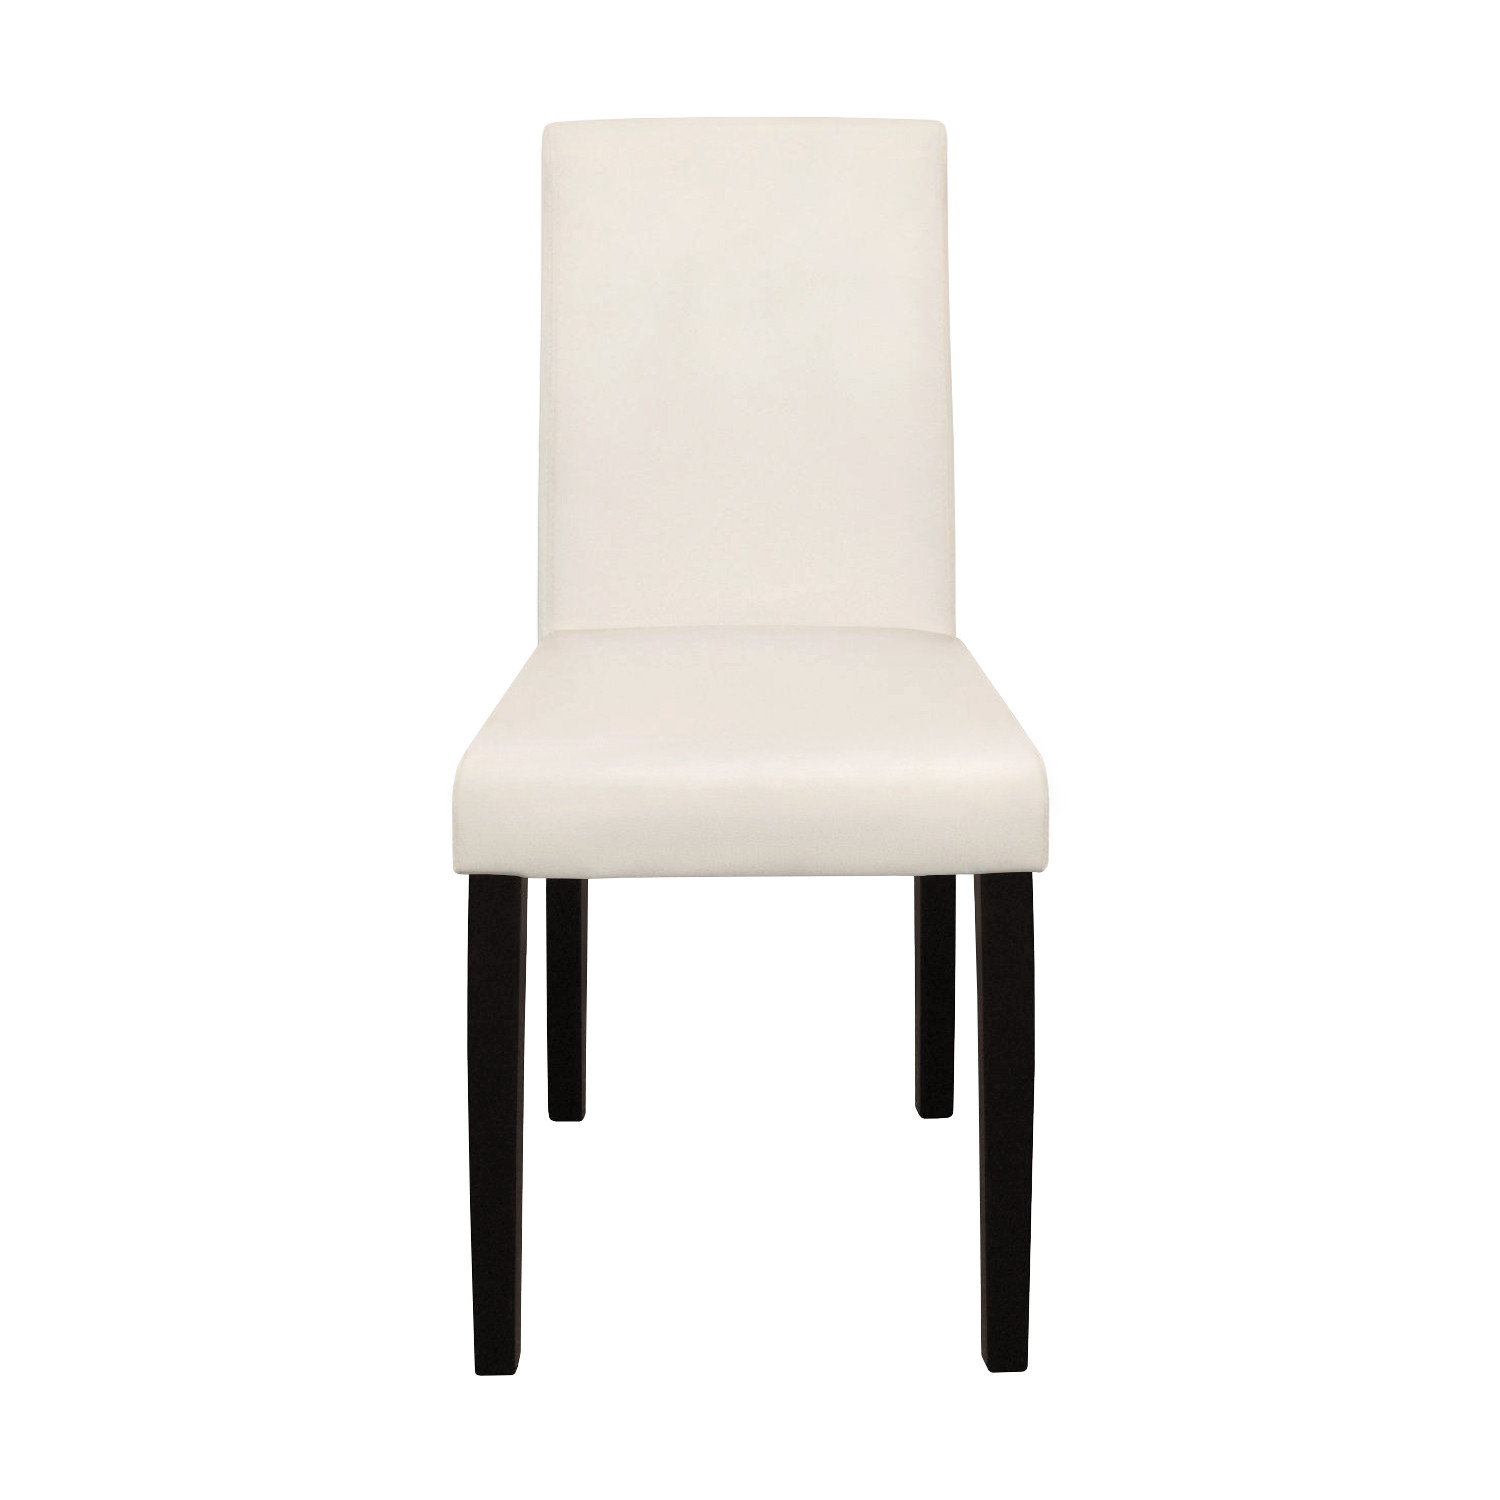 IDEA обеденный стул ПРИМА белый/коричневый 3036